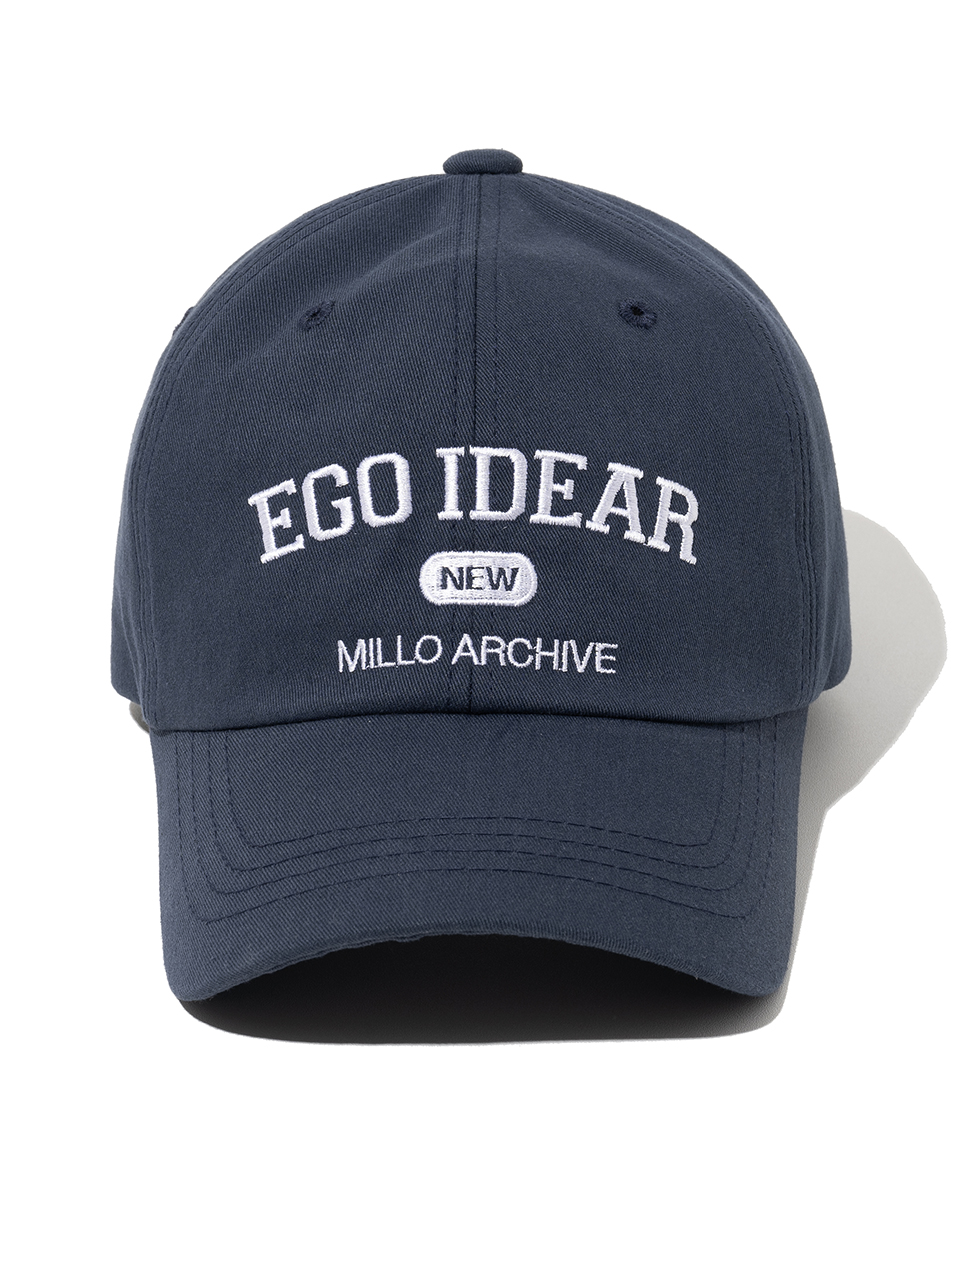 Ego Ideal Ball Cap - Navy